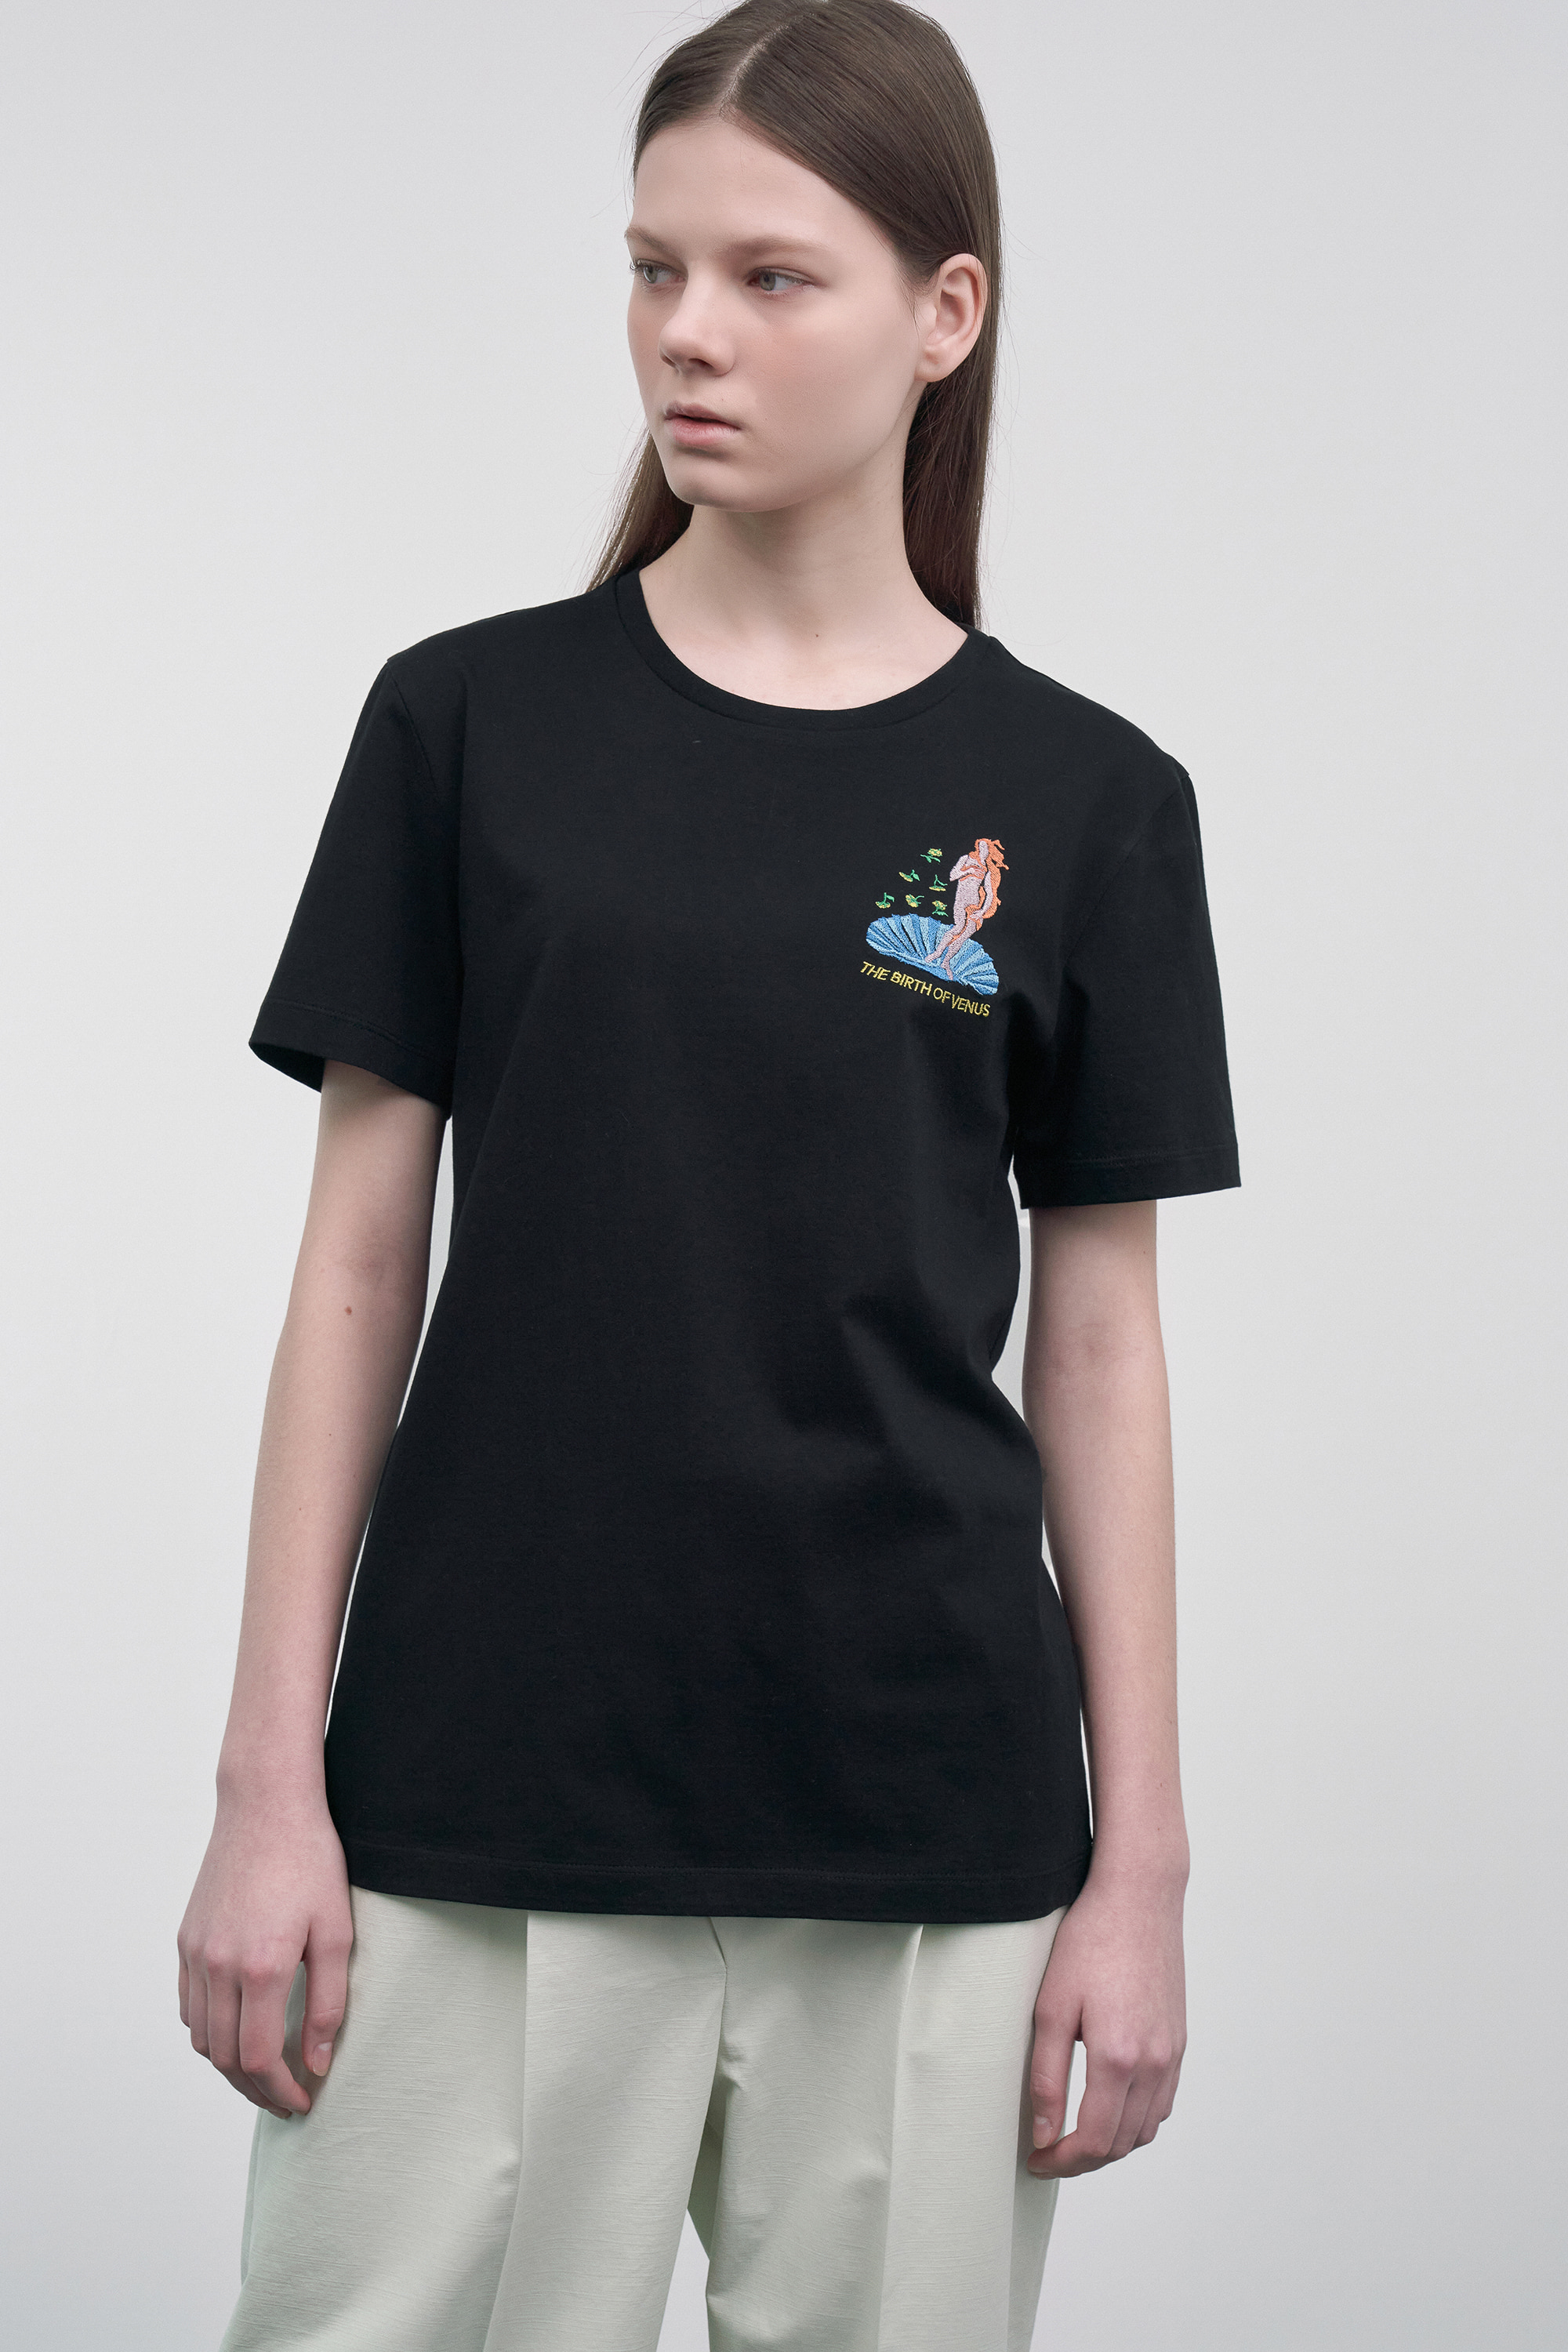 Heroine Campaign T-Shirt(the birth of venus)